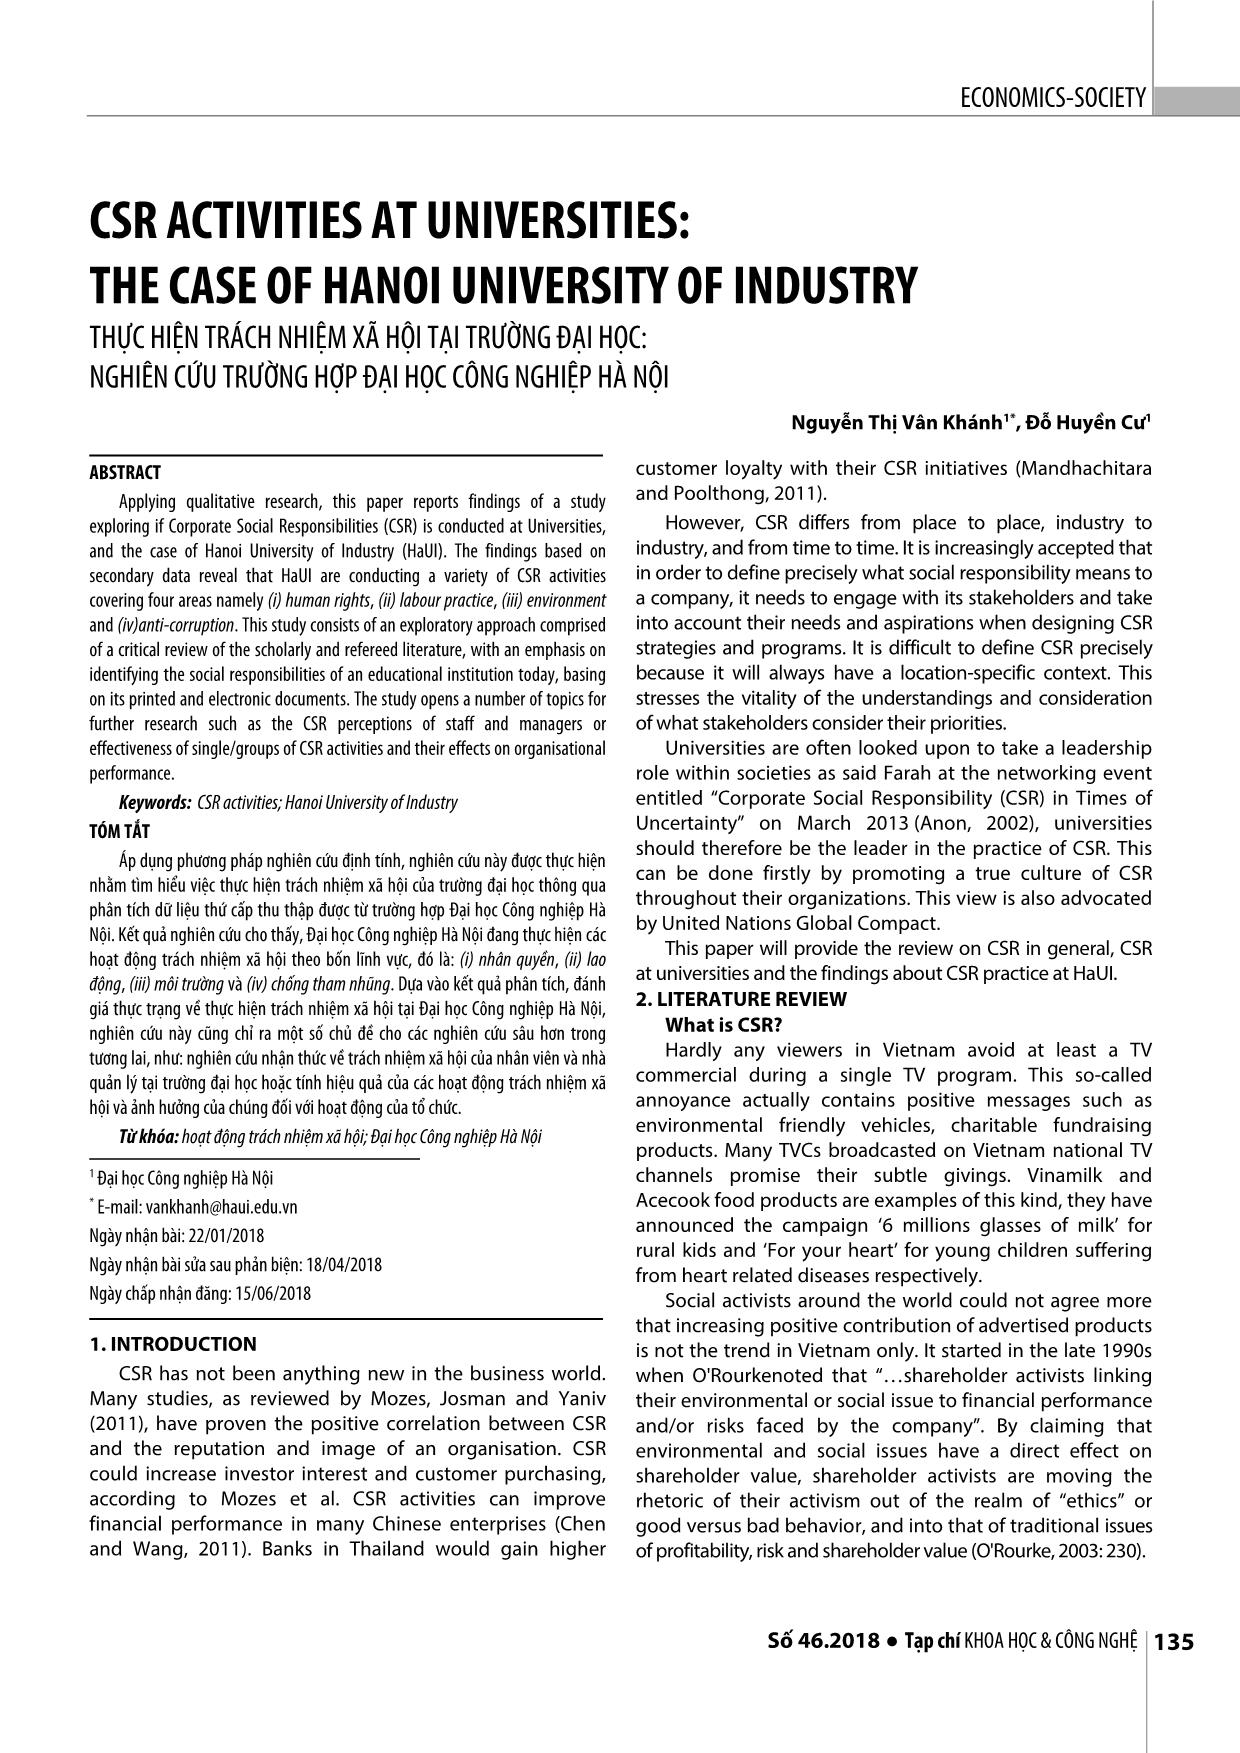 CSR activities at universities: The case of Hanoi University of Industry trang 1